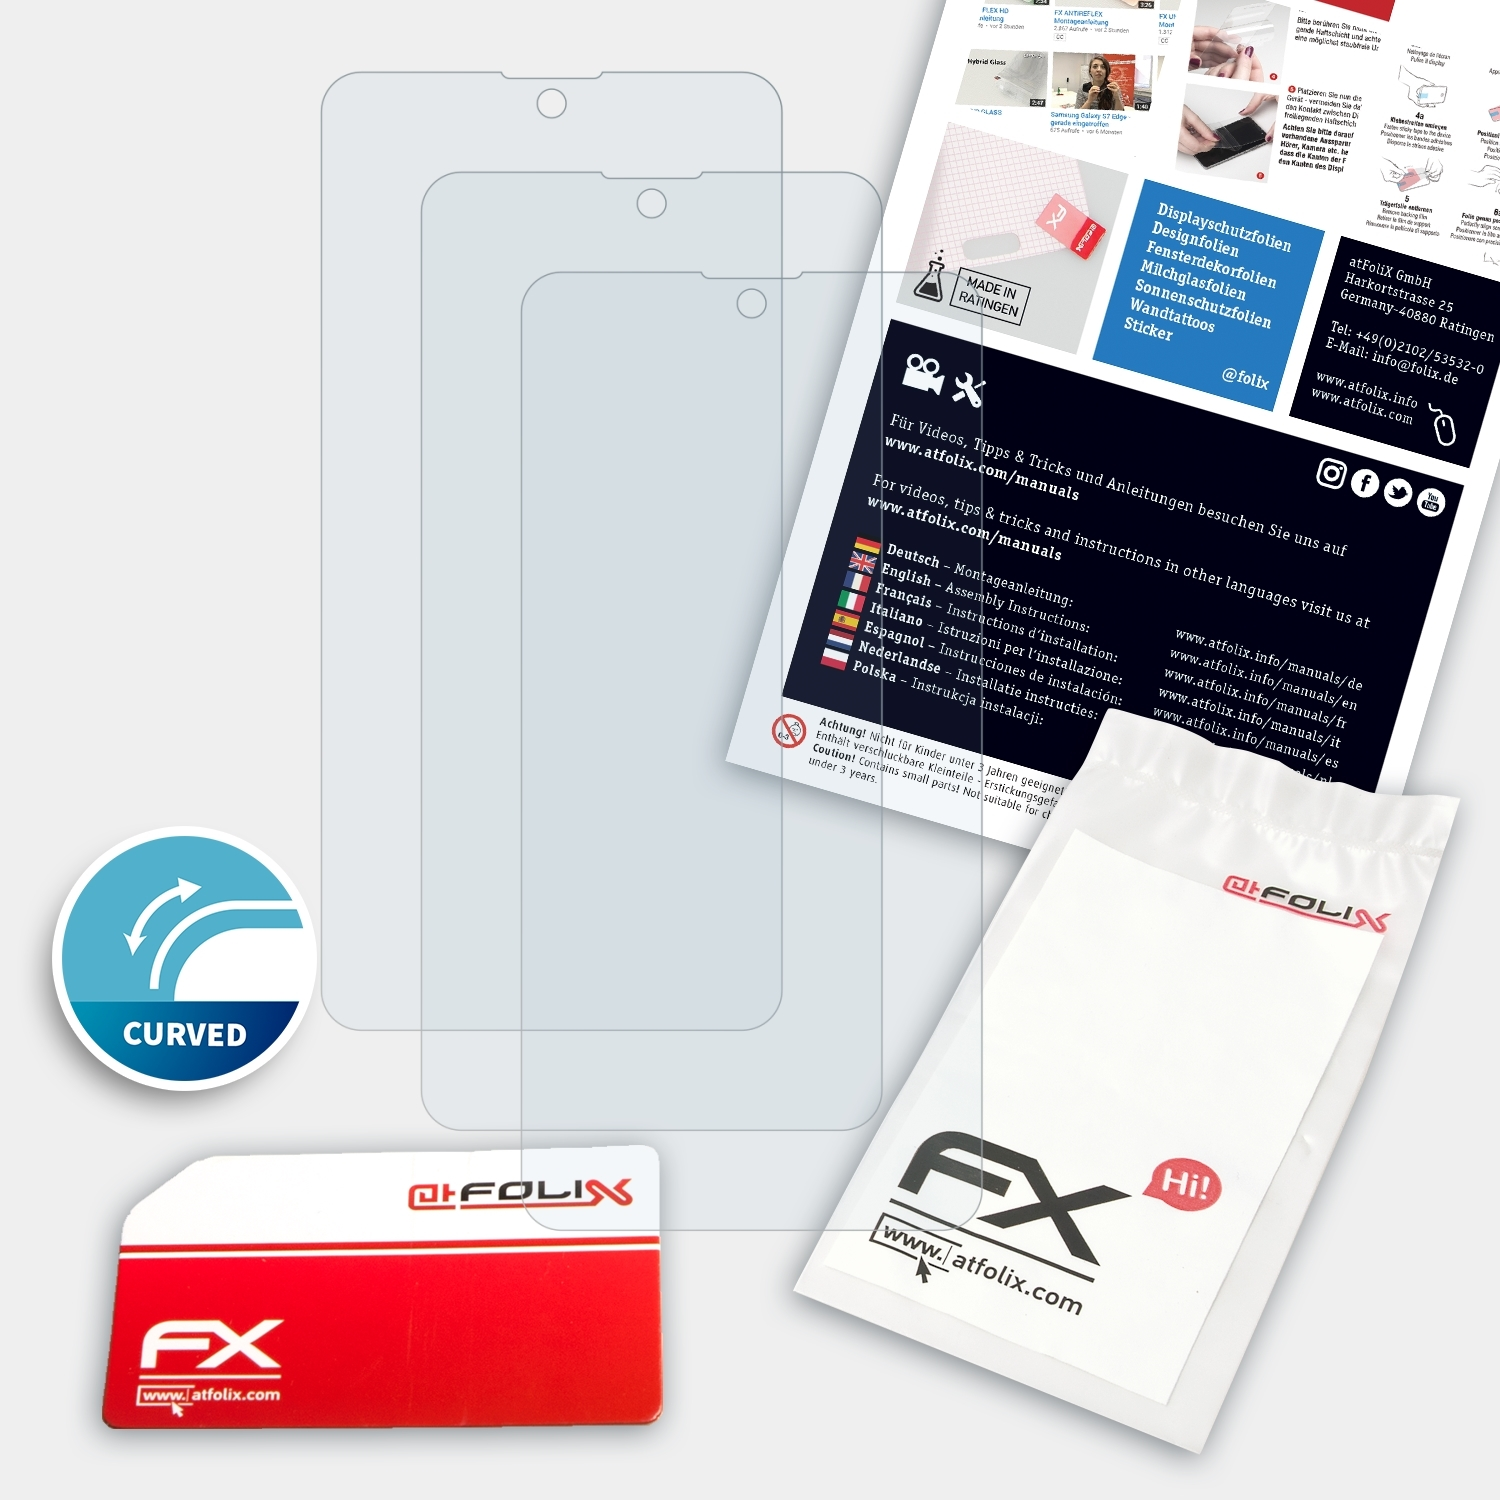 (SO-41B)) Xperia FX-ActiFleX Ace Displayschutz(für ATFOLIX II 3x Sony